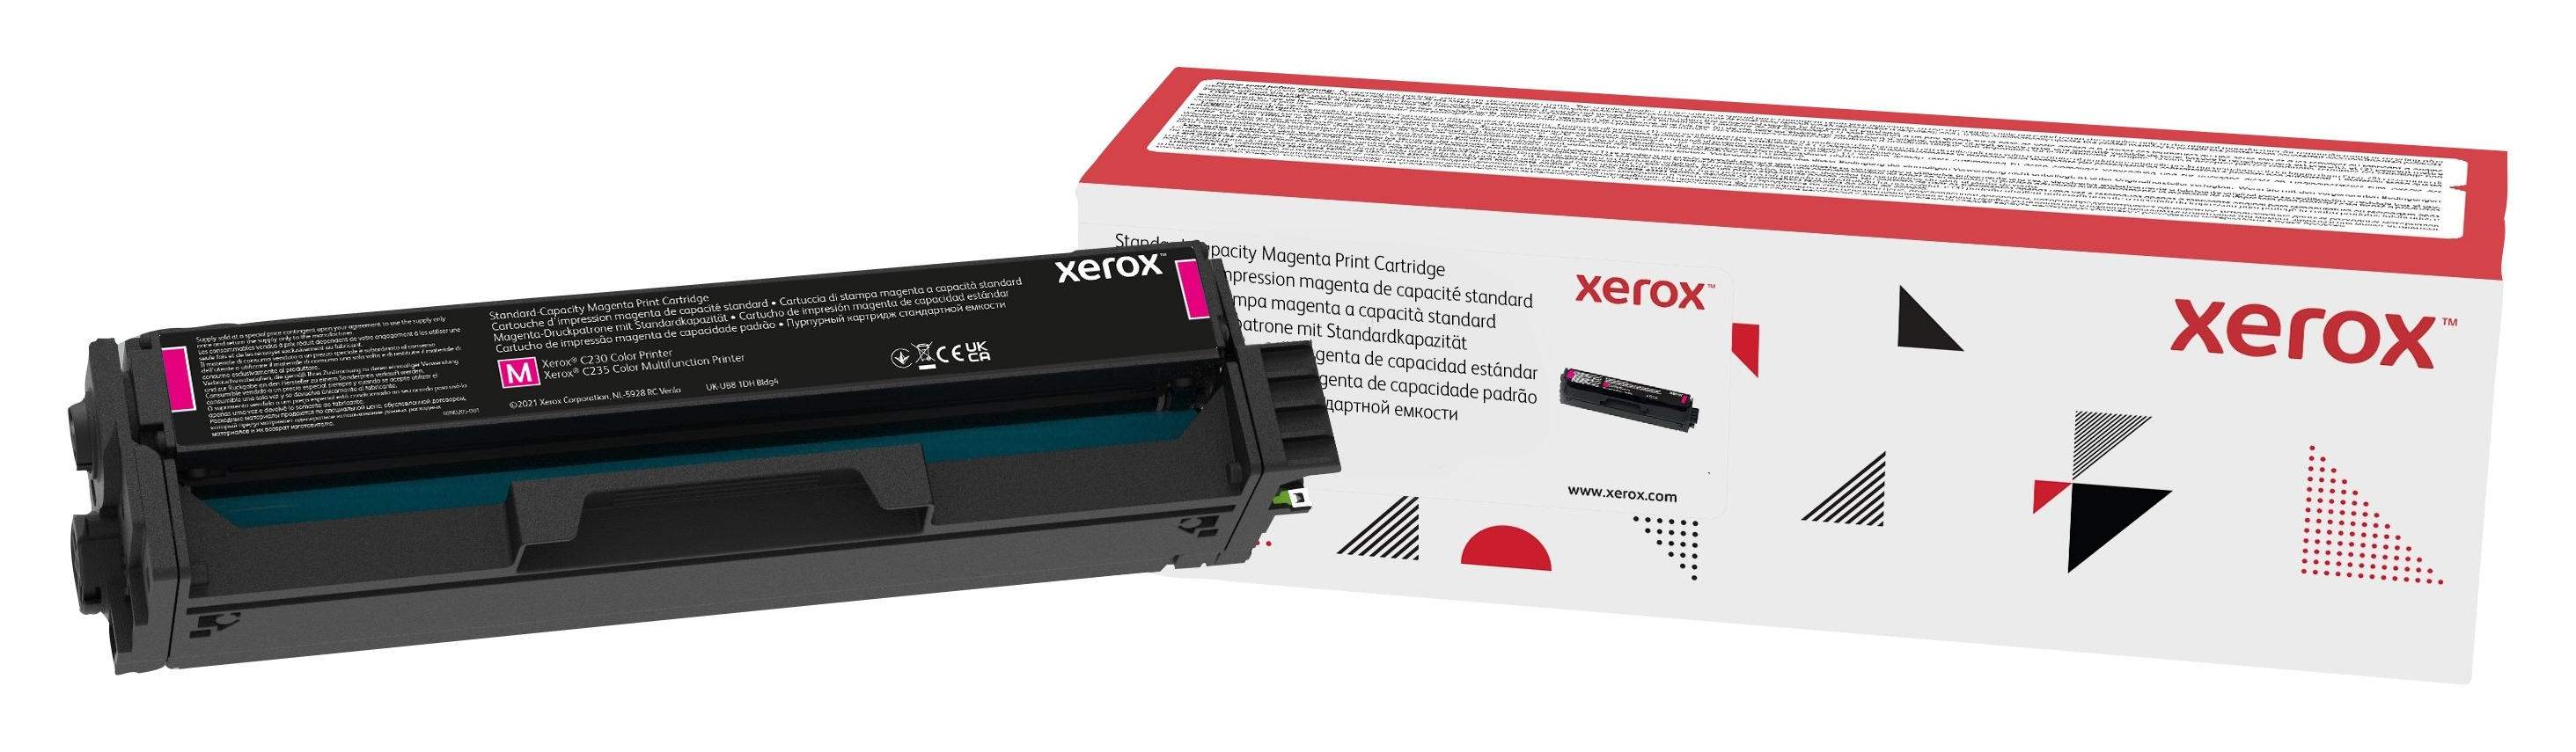 XEROX C230/C235 Magenta Standard Capacity Toner Cartridge 1500 pages